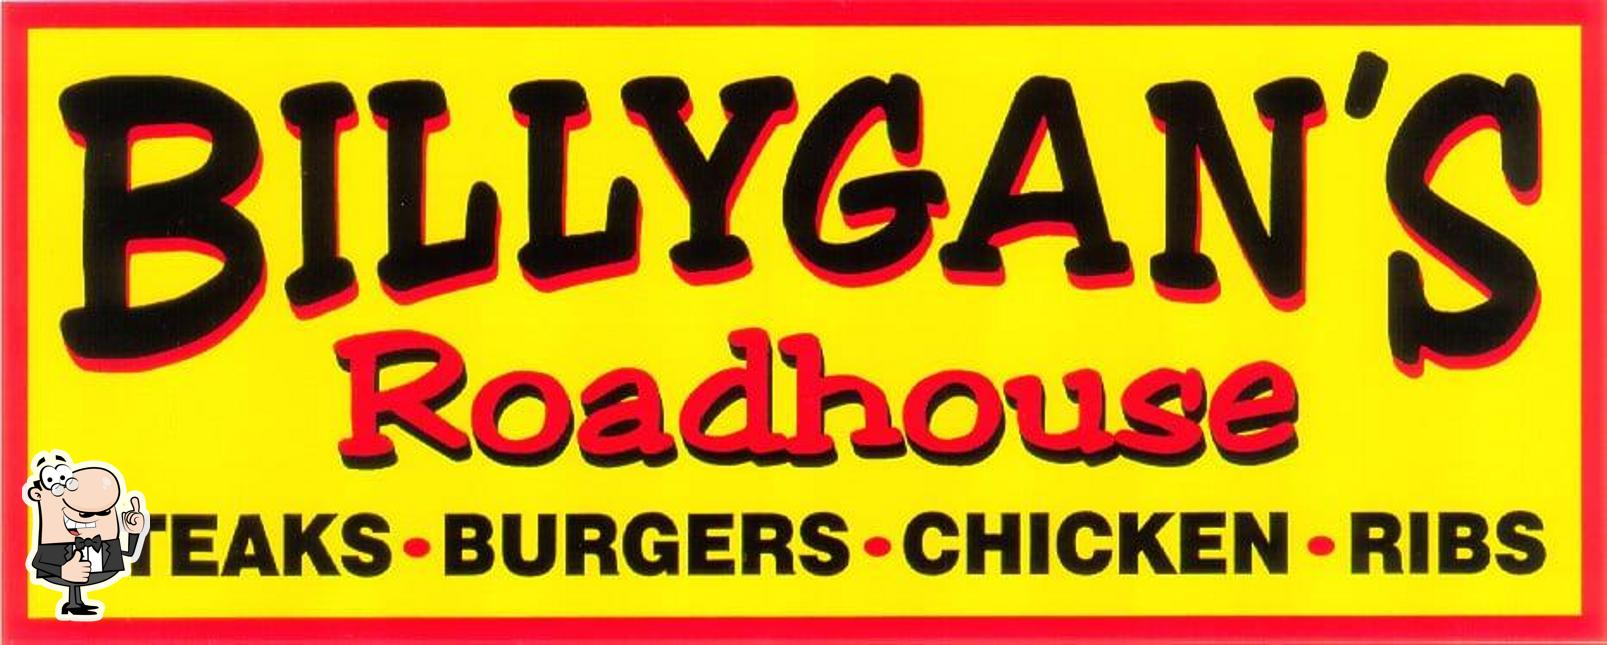 Billygan's Roadhouse, 13200 NE Hwy 99 in Vancouver Restaurant menu